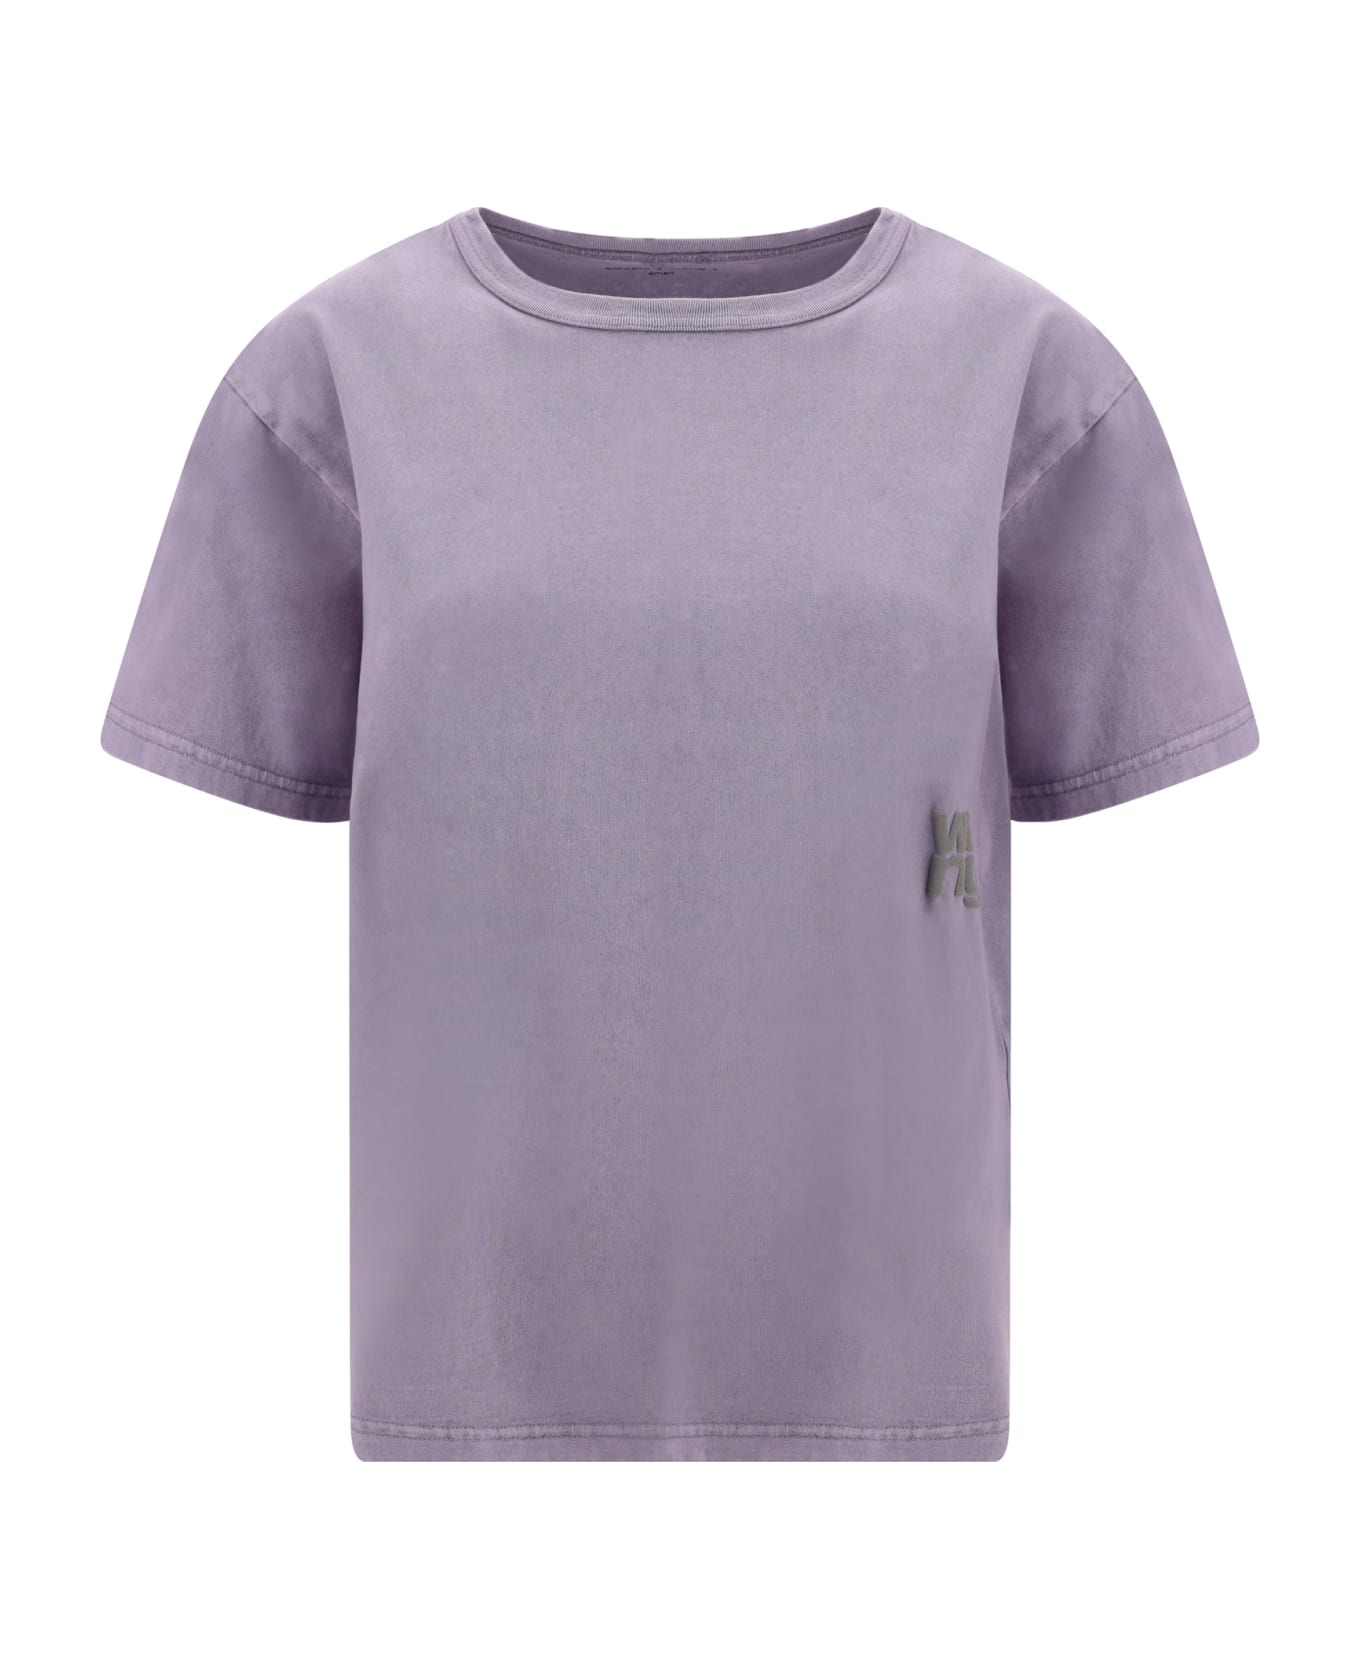 Alexander Wang Essential T-shirt - A Acid Pink Lavender